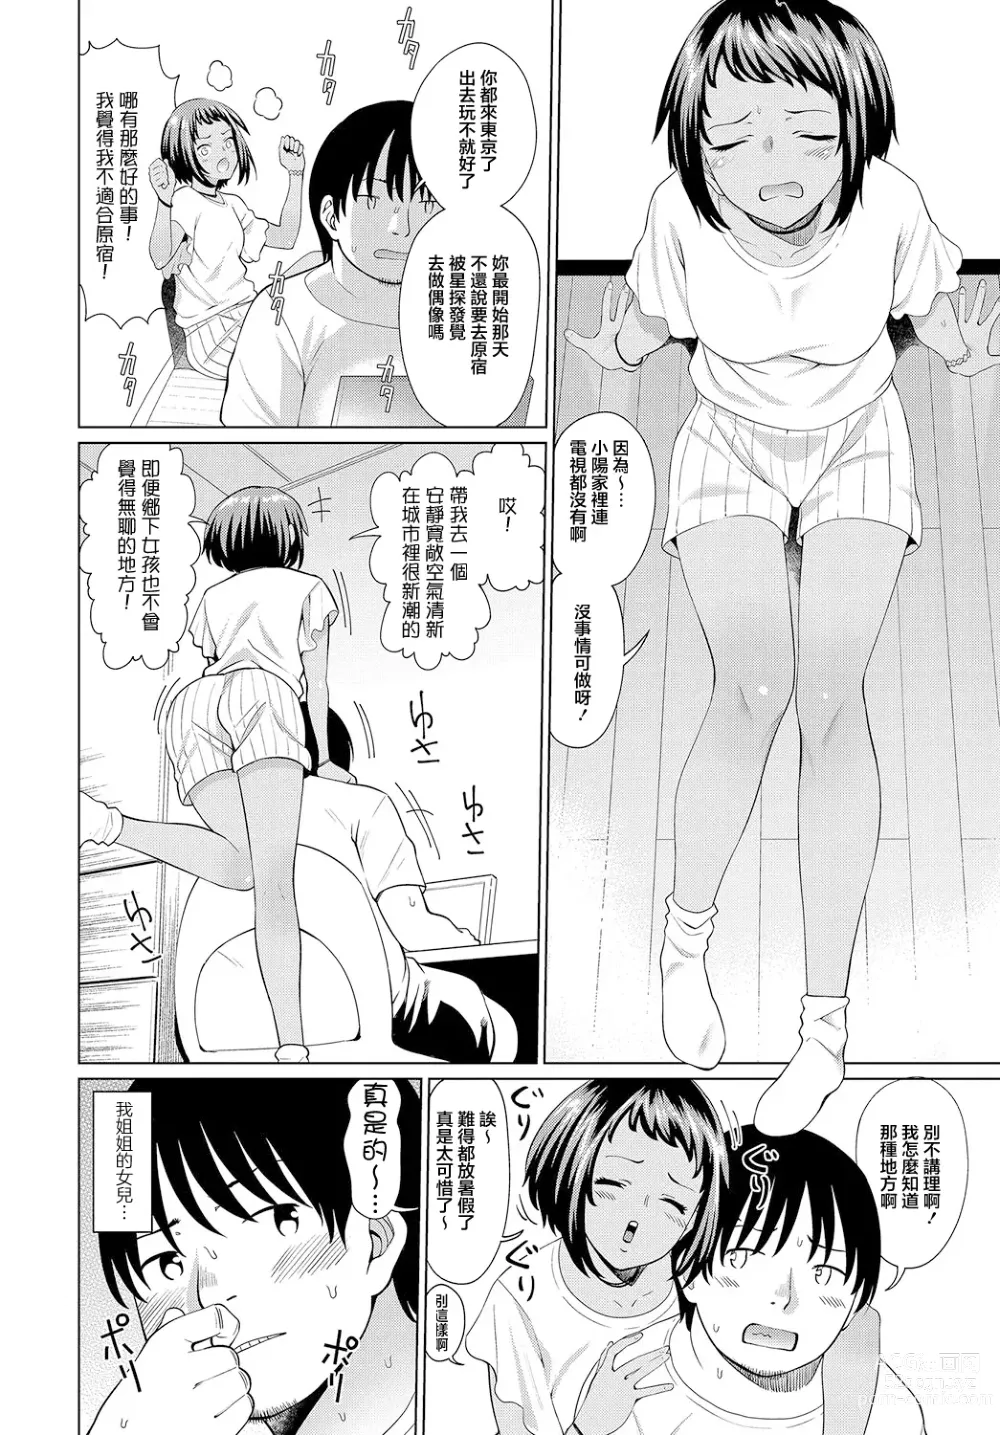 Page 2 of manga Mei no Natsuyasumi